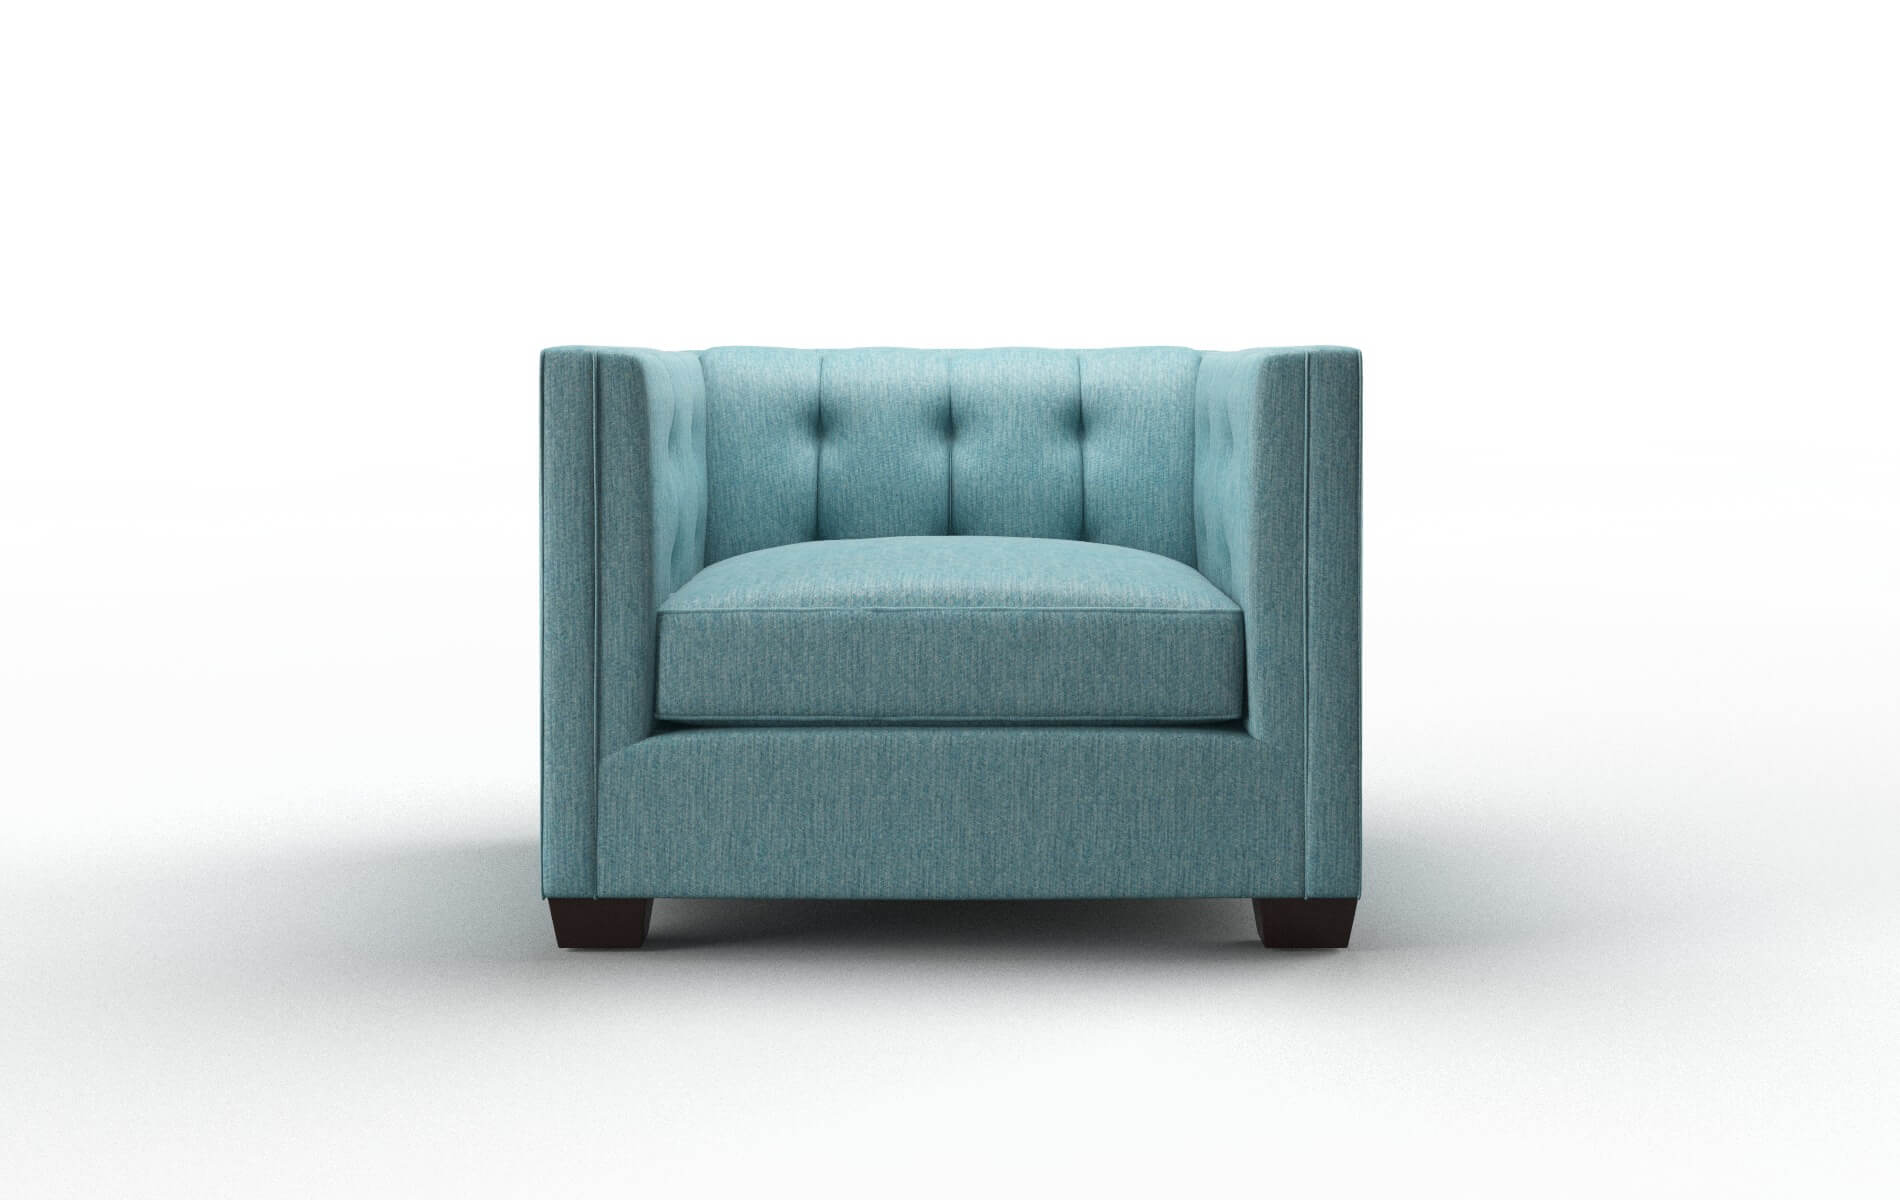 Grant Cosmo Turquoise Chair espresso legs 1